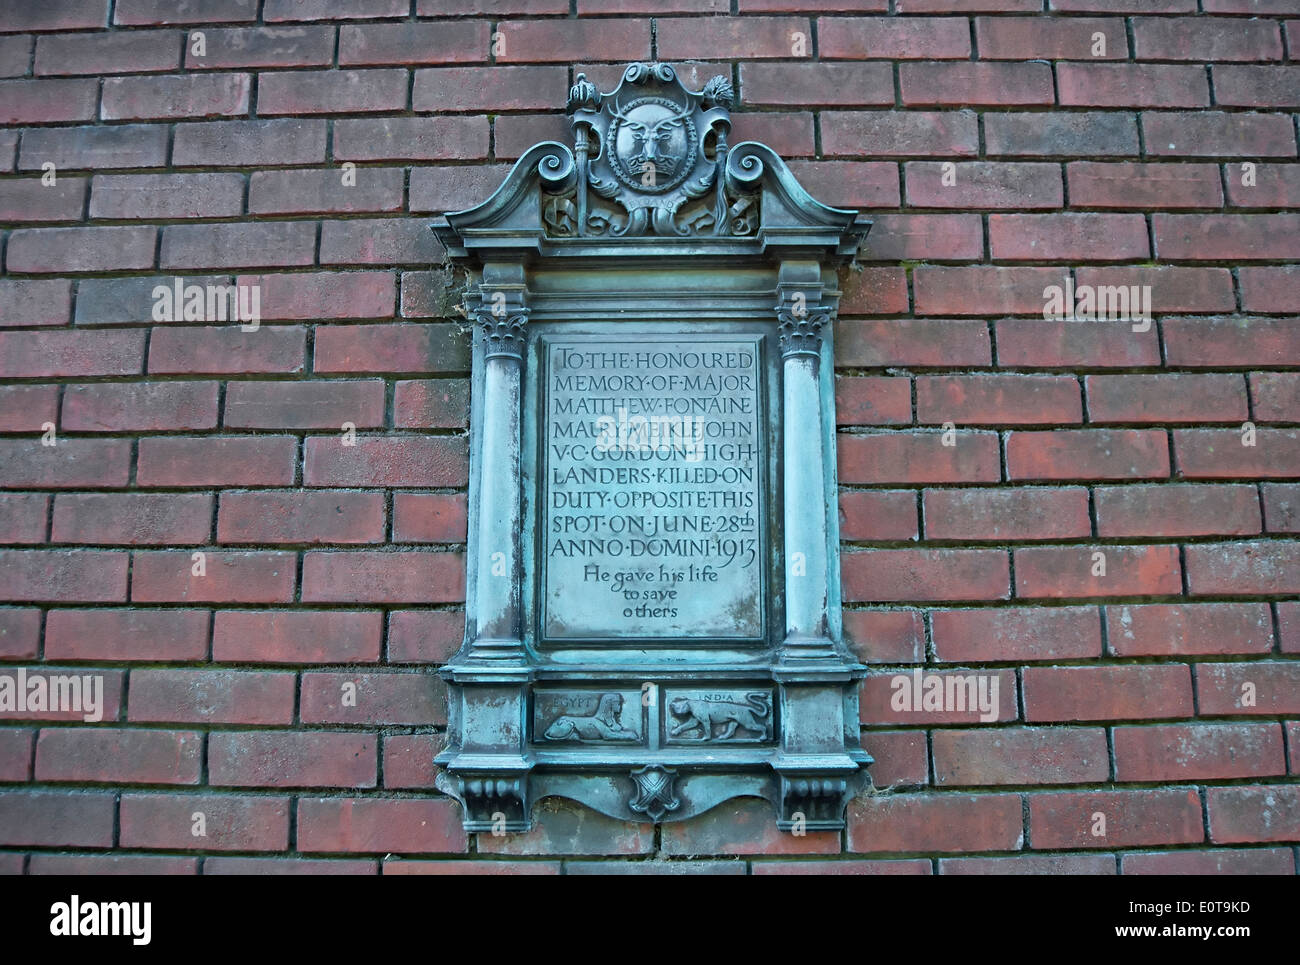 Wall memorial a importanti matthew fontaine maury meiklejohn, titolare della Victoria Cross, Hyde Park, Londra, Inghilterra Foto Stock